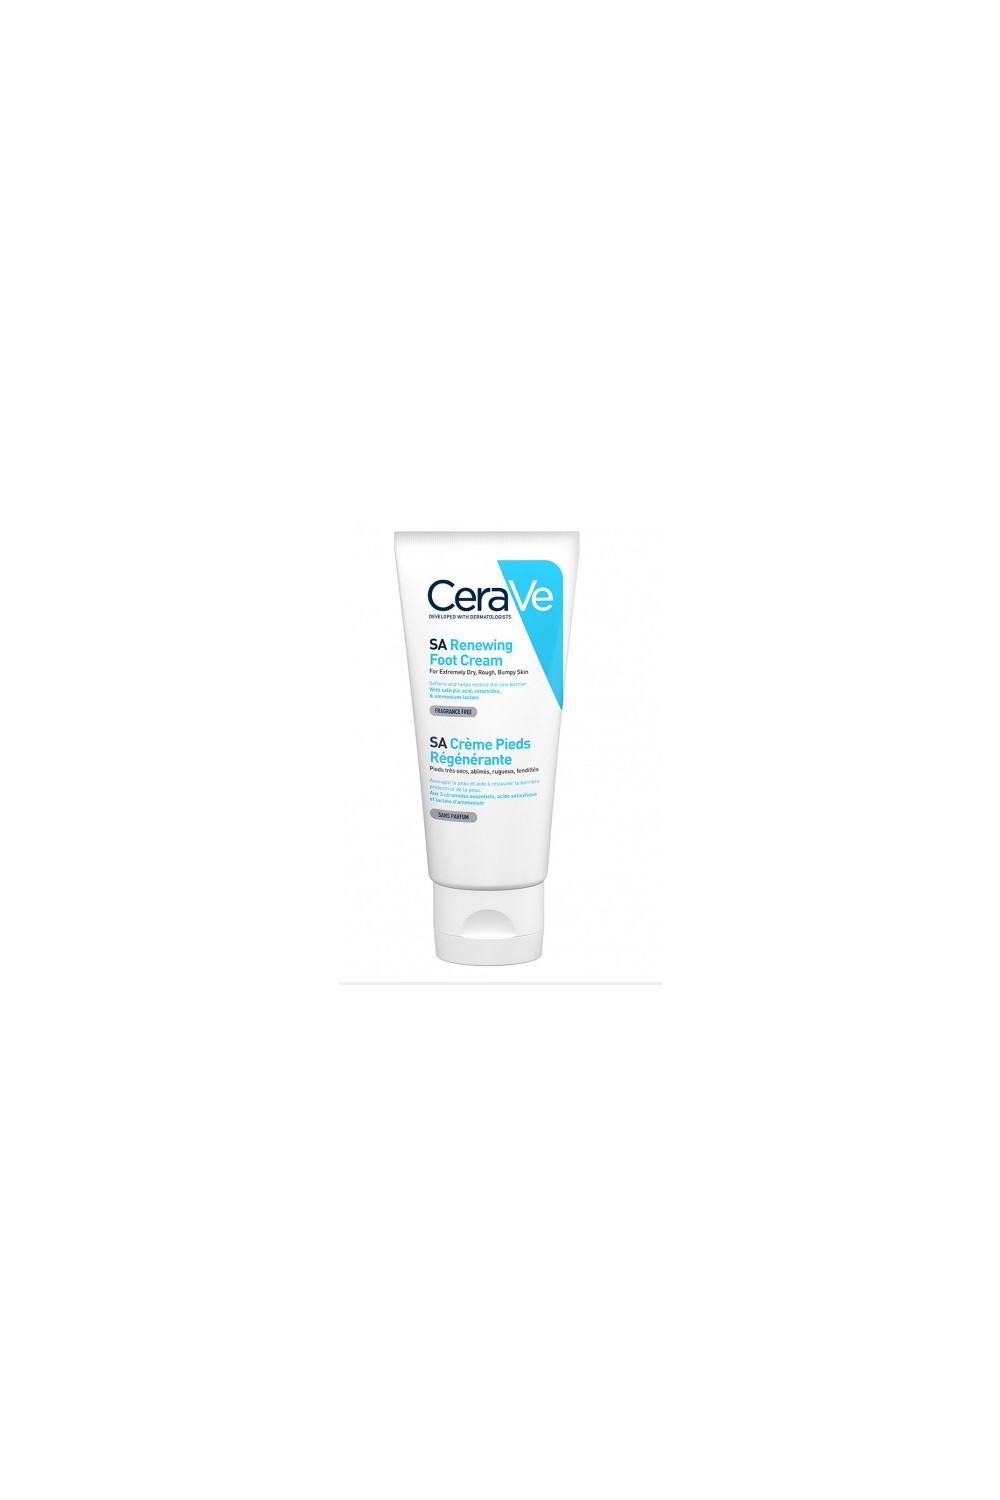 Cerave Renewing S A Foot Cream 88ml